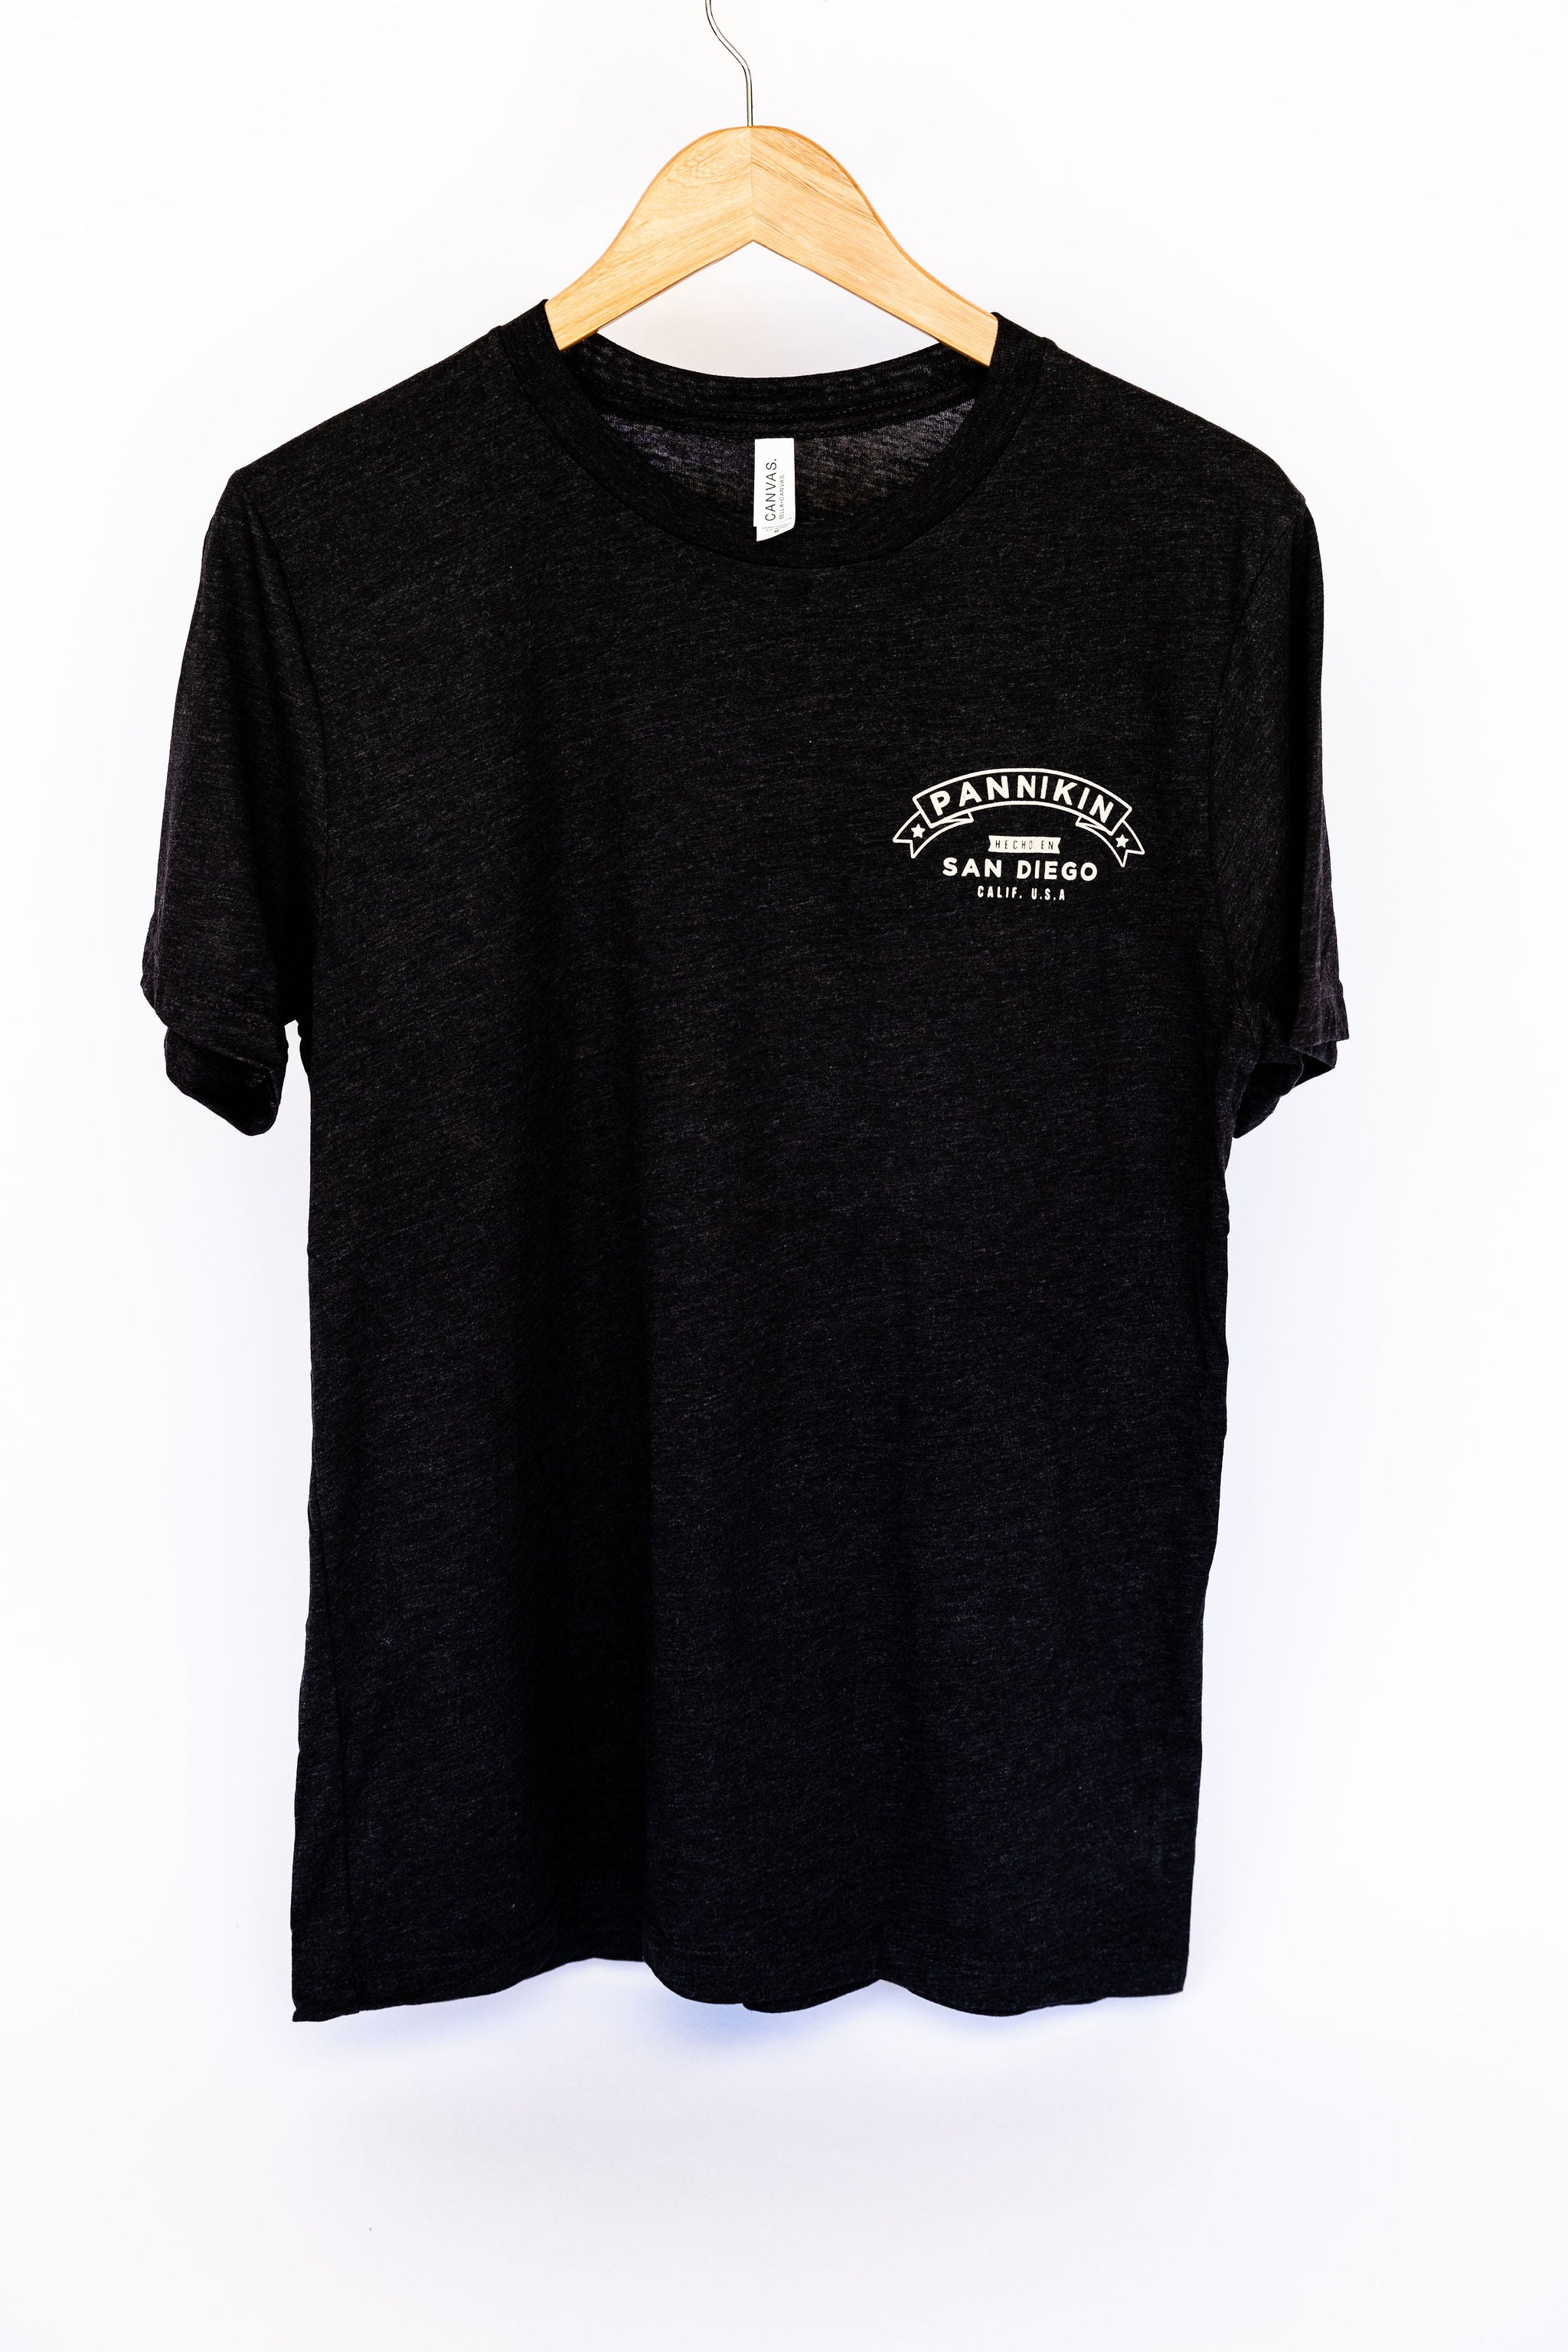 Calavera Tri Blend T-shirt in Charcoal